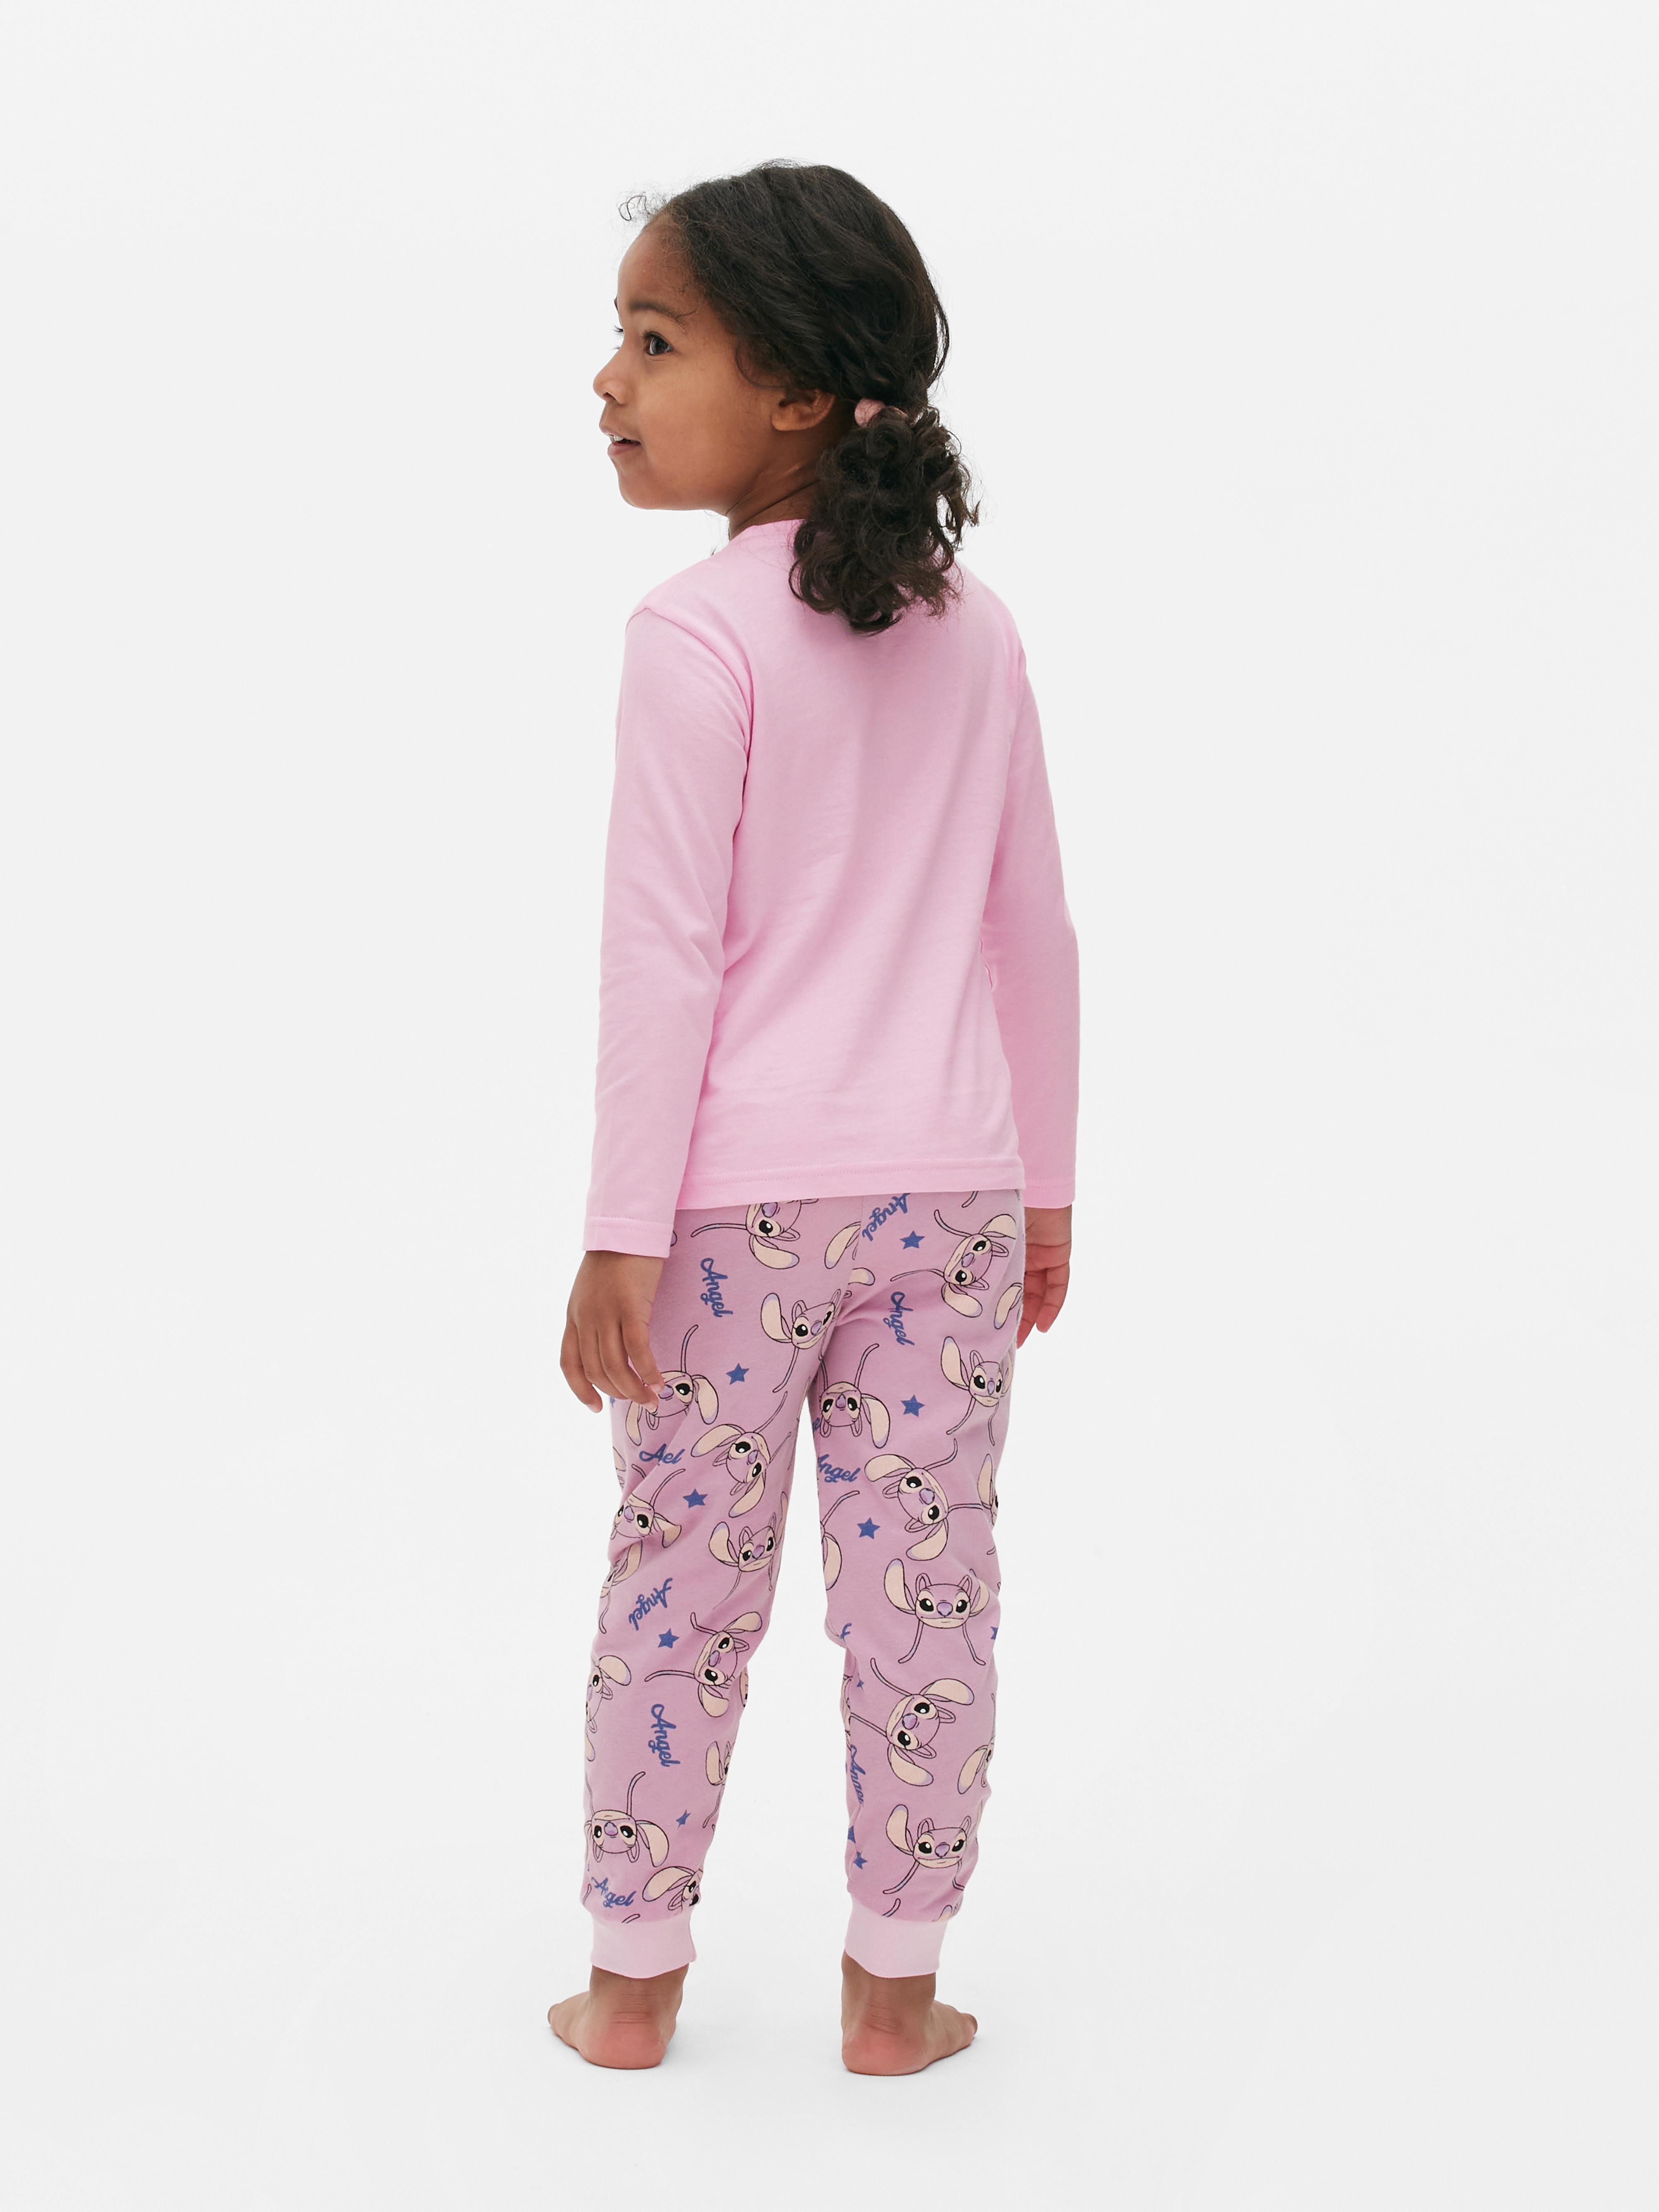 combinaison pyjama angel avec capuche fille - disney stitch rose fille